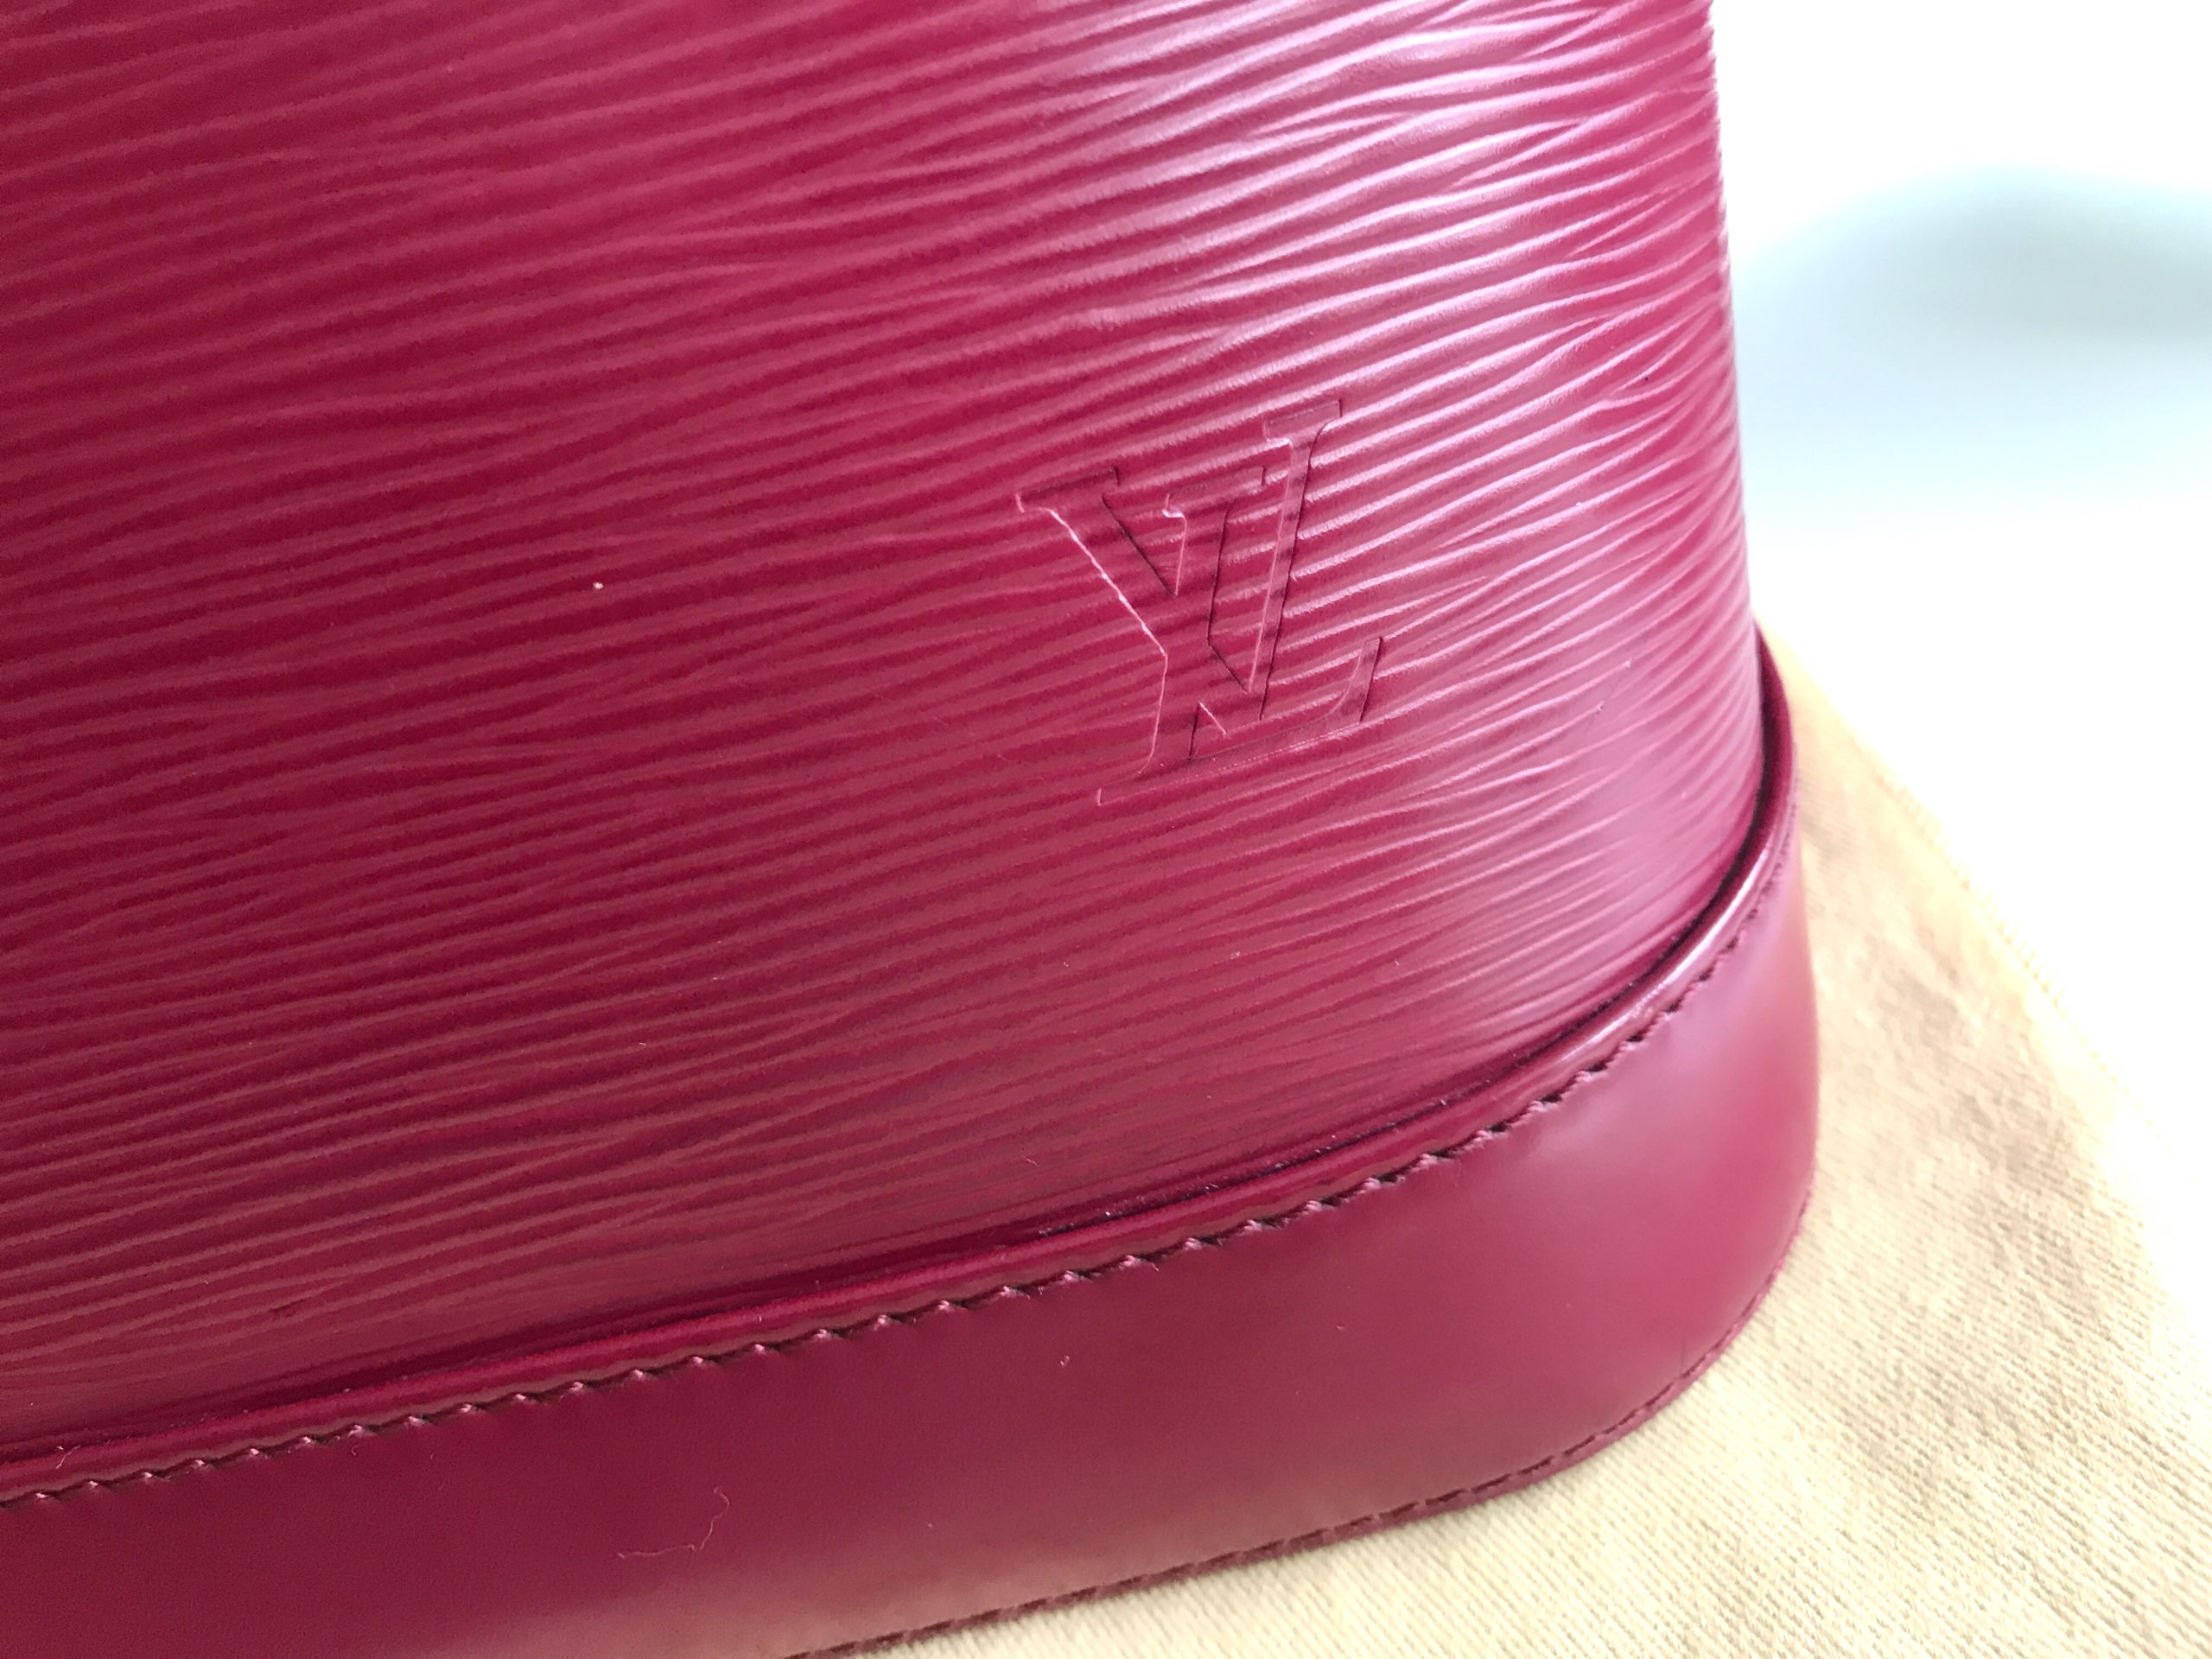 LOUIS VUITTON, = Hot Pink Fuschia patent leather Alma handbag purse